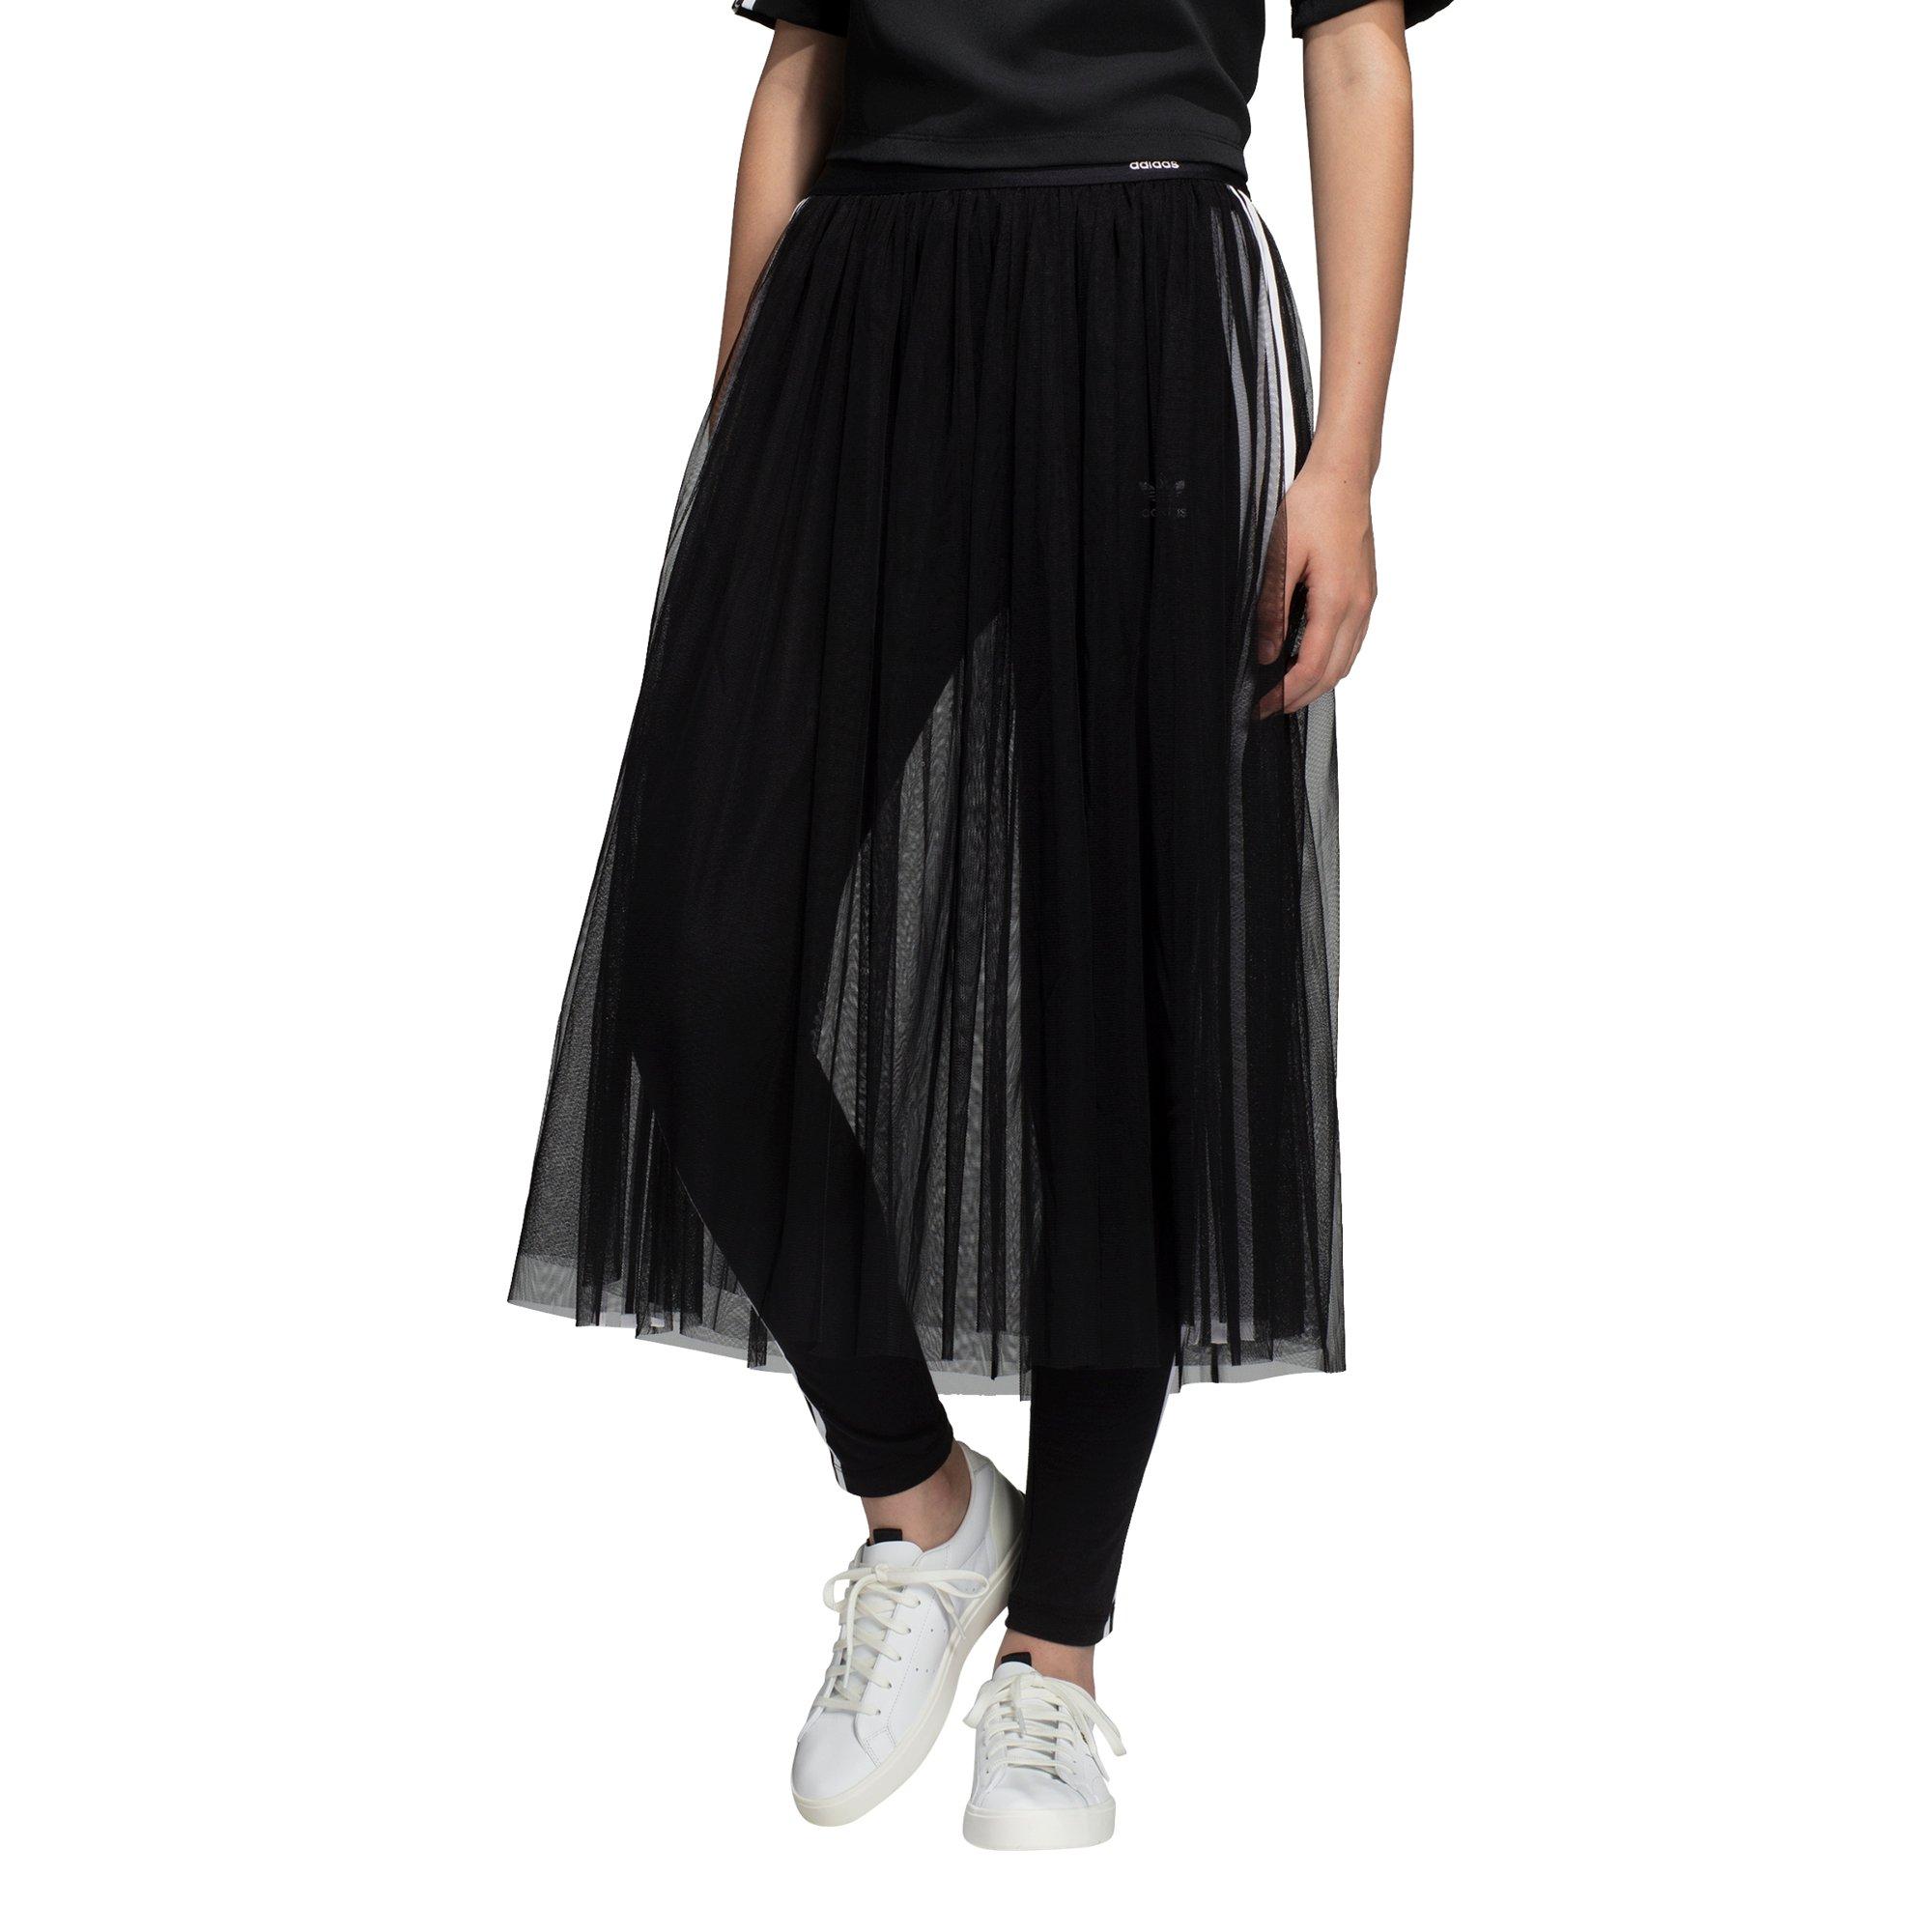 adidas black mesh skirt